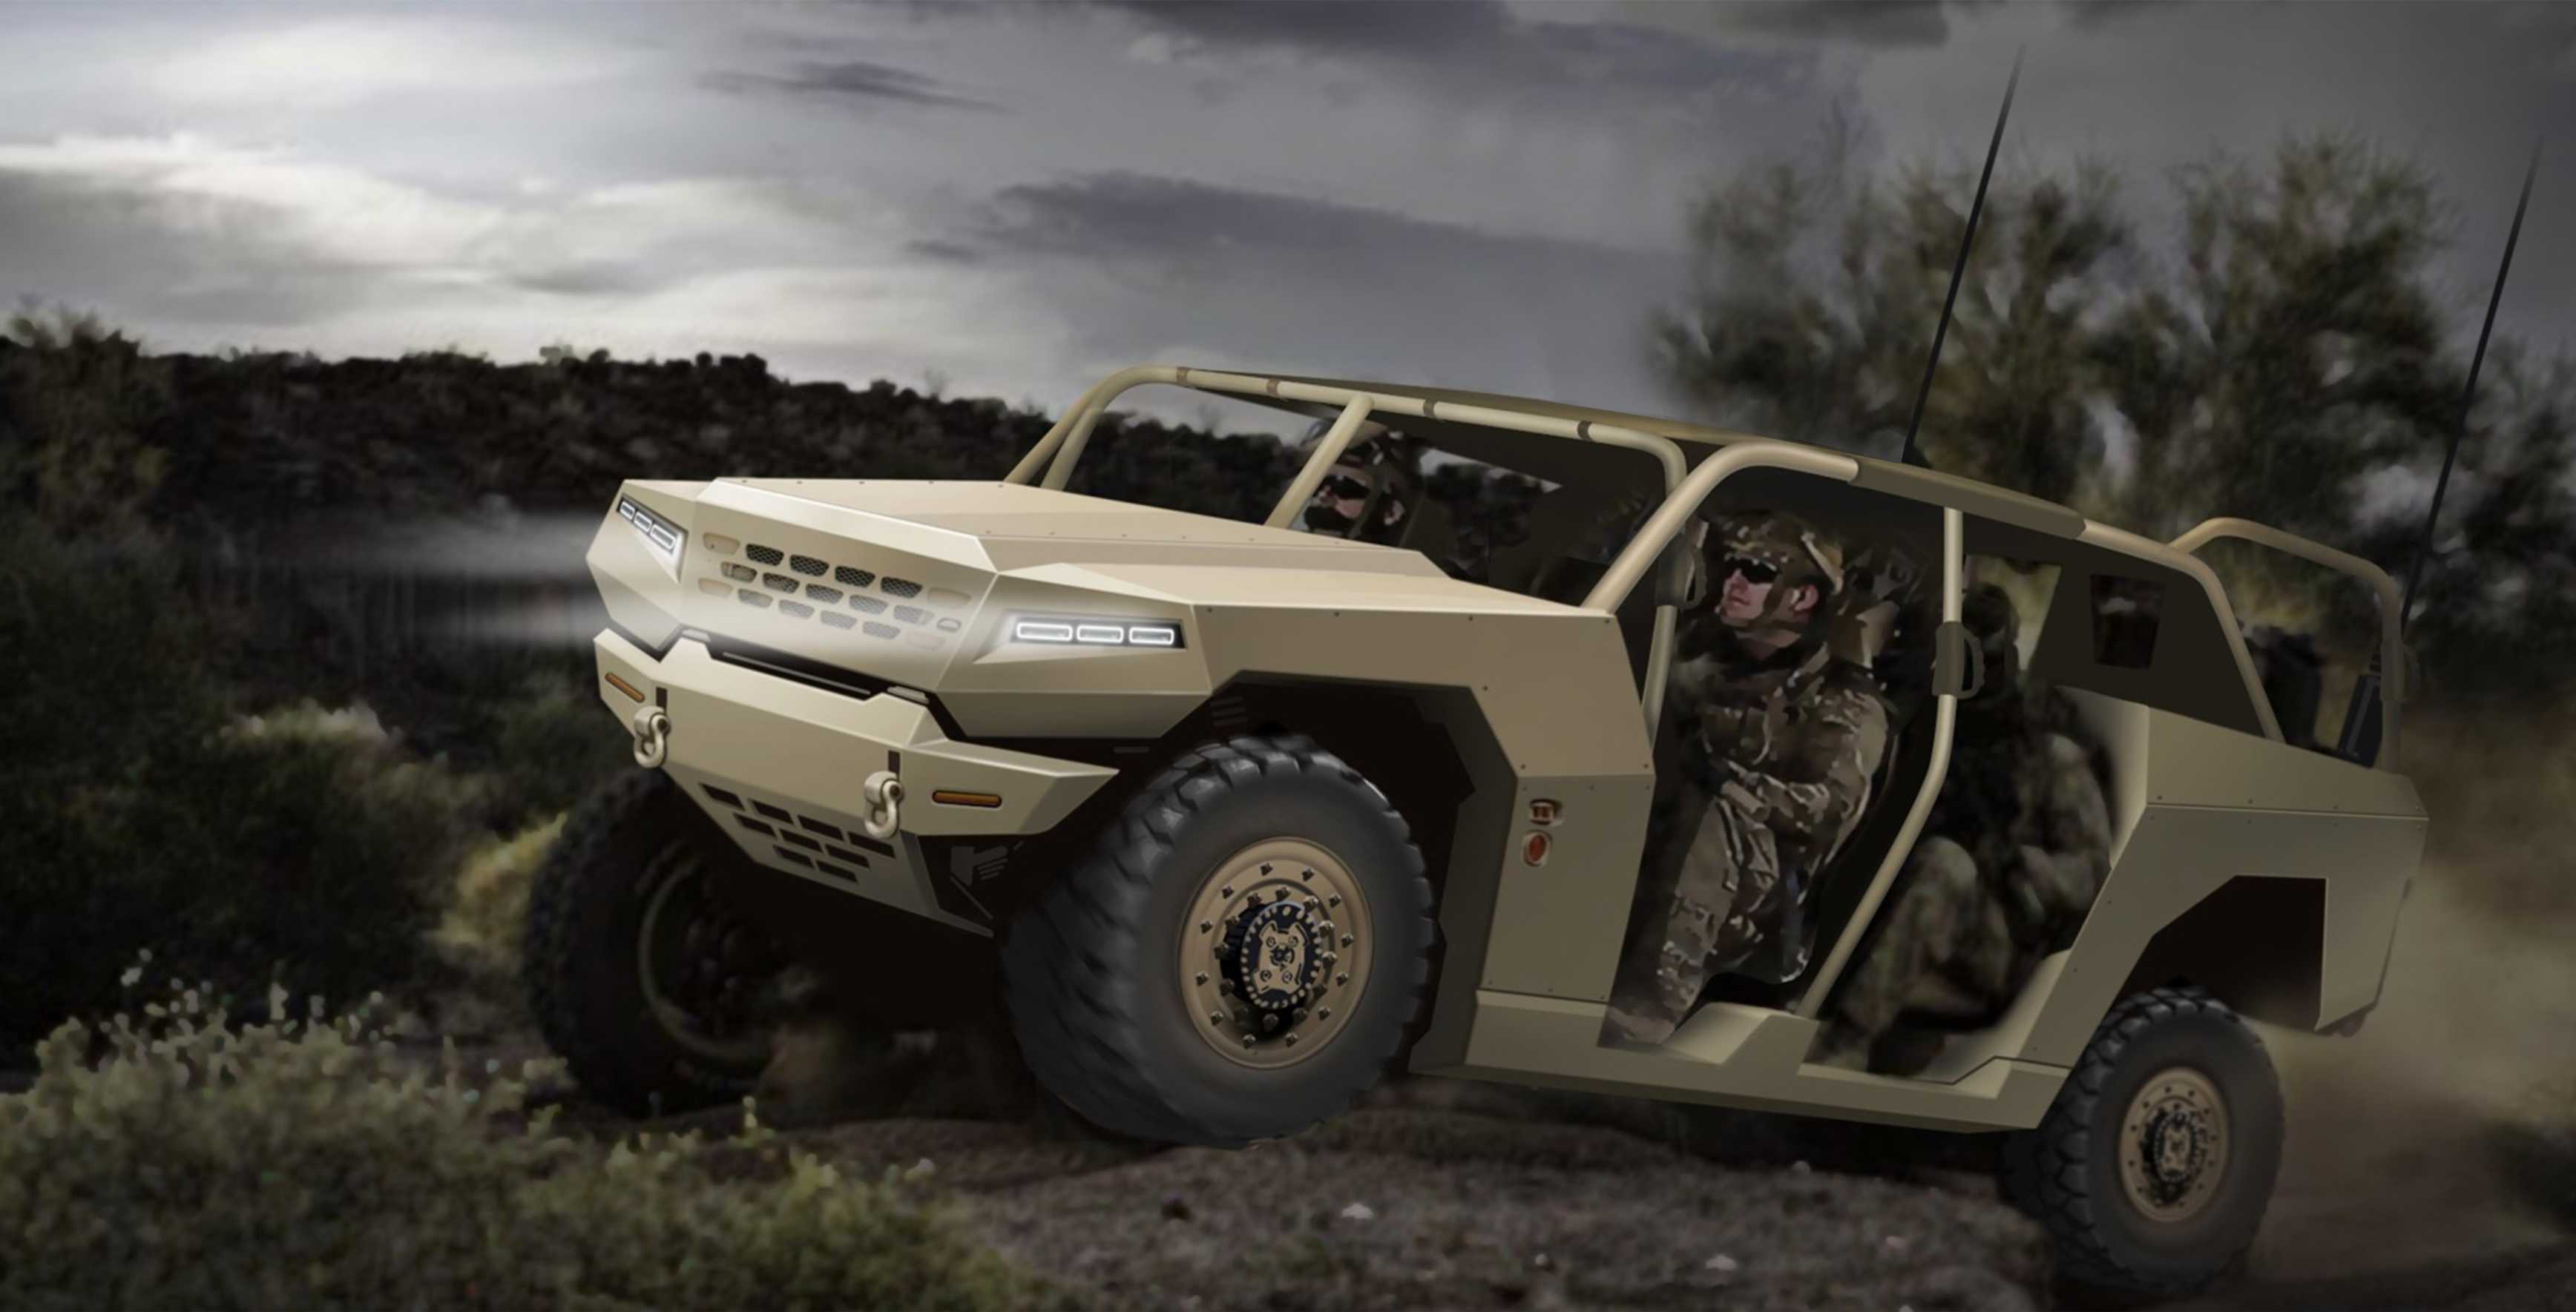 Kia Motors Accelerates Development Of Combat Vehicles With New Military Standard Platform